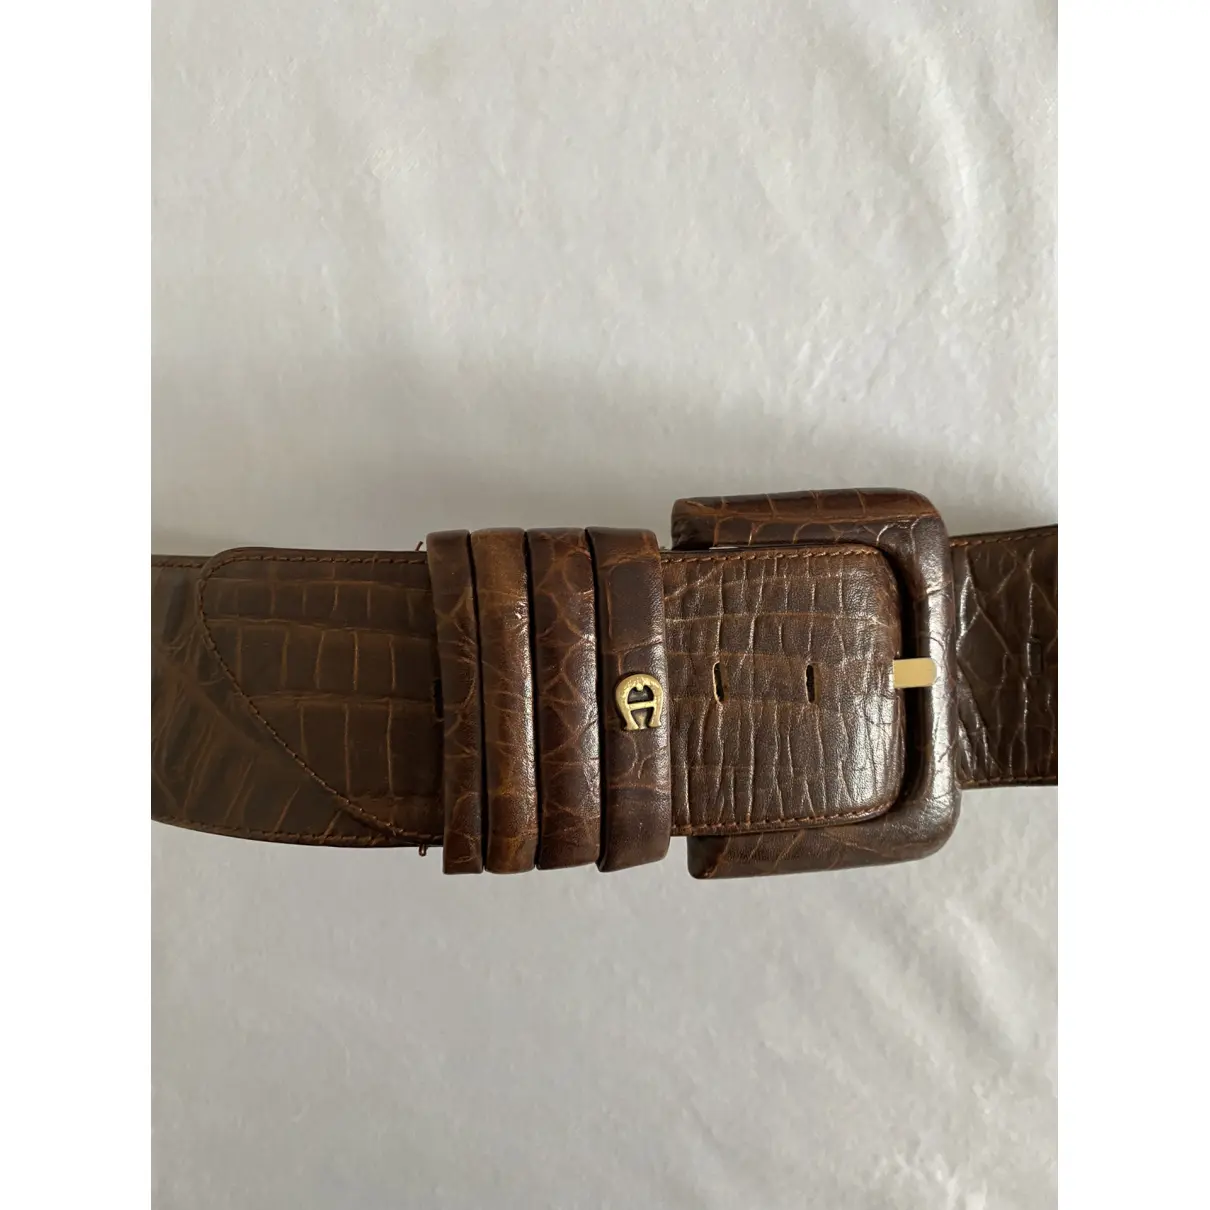 Buy Etienne Aigner Leather belt online